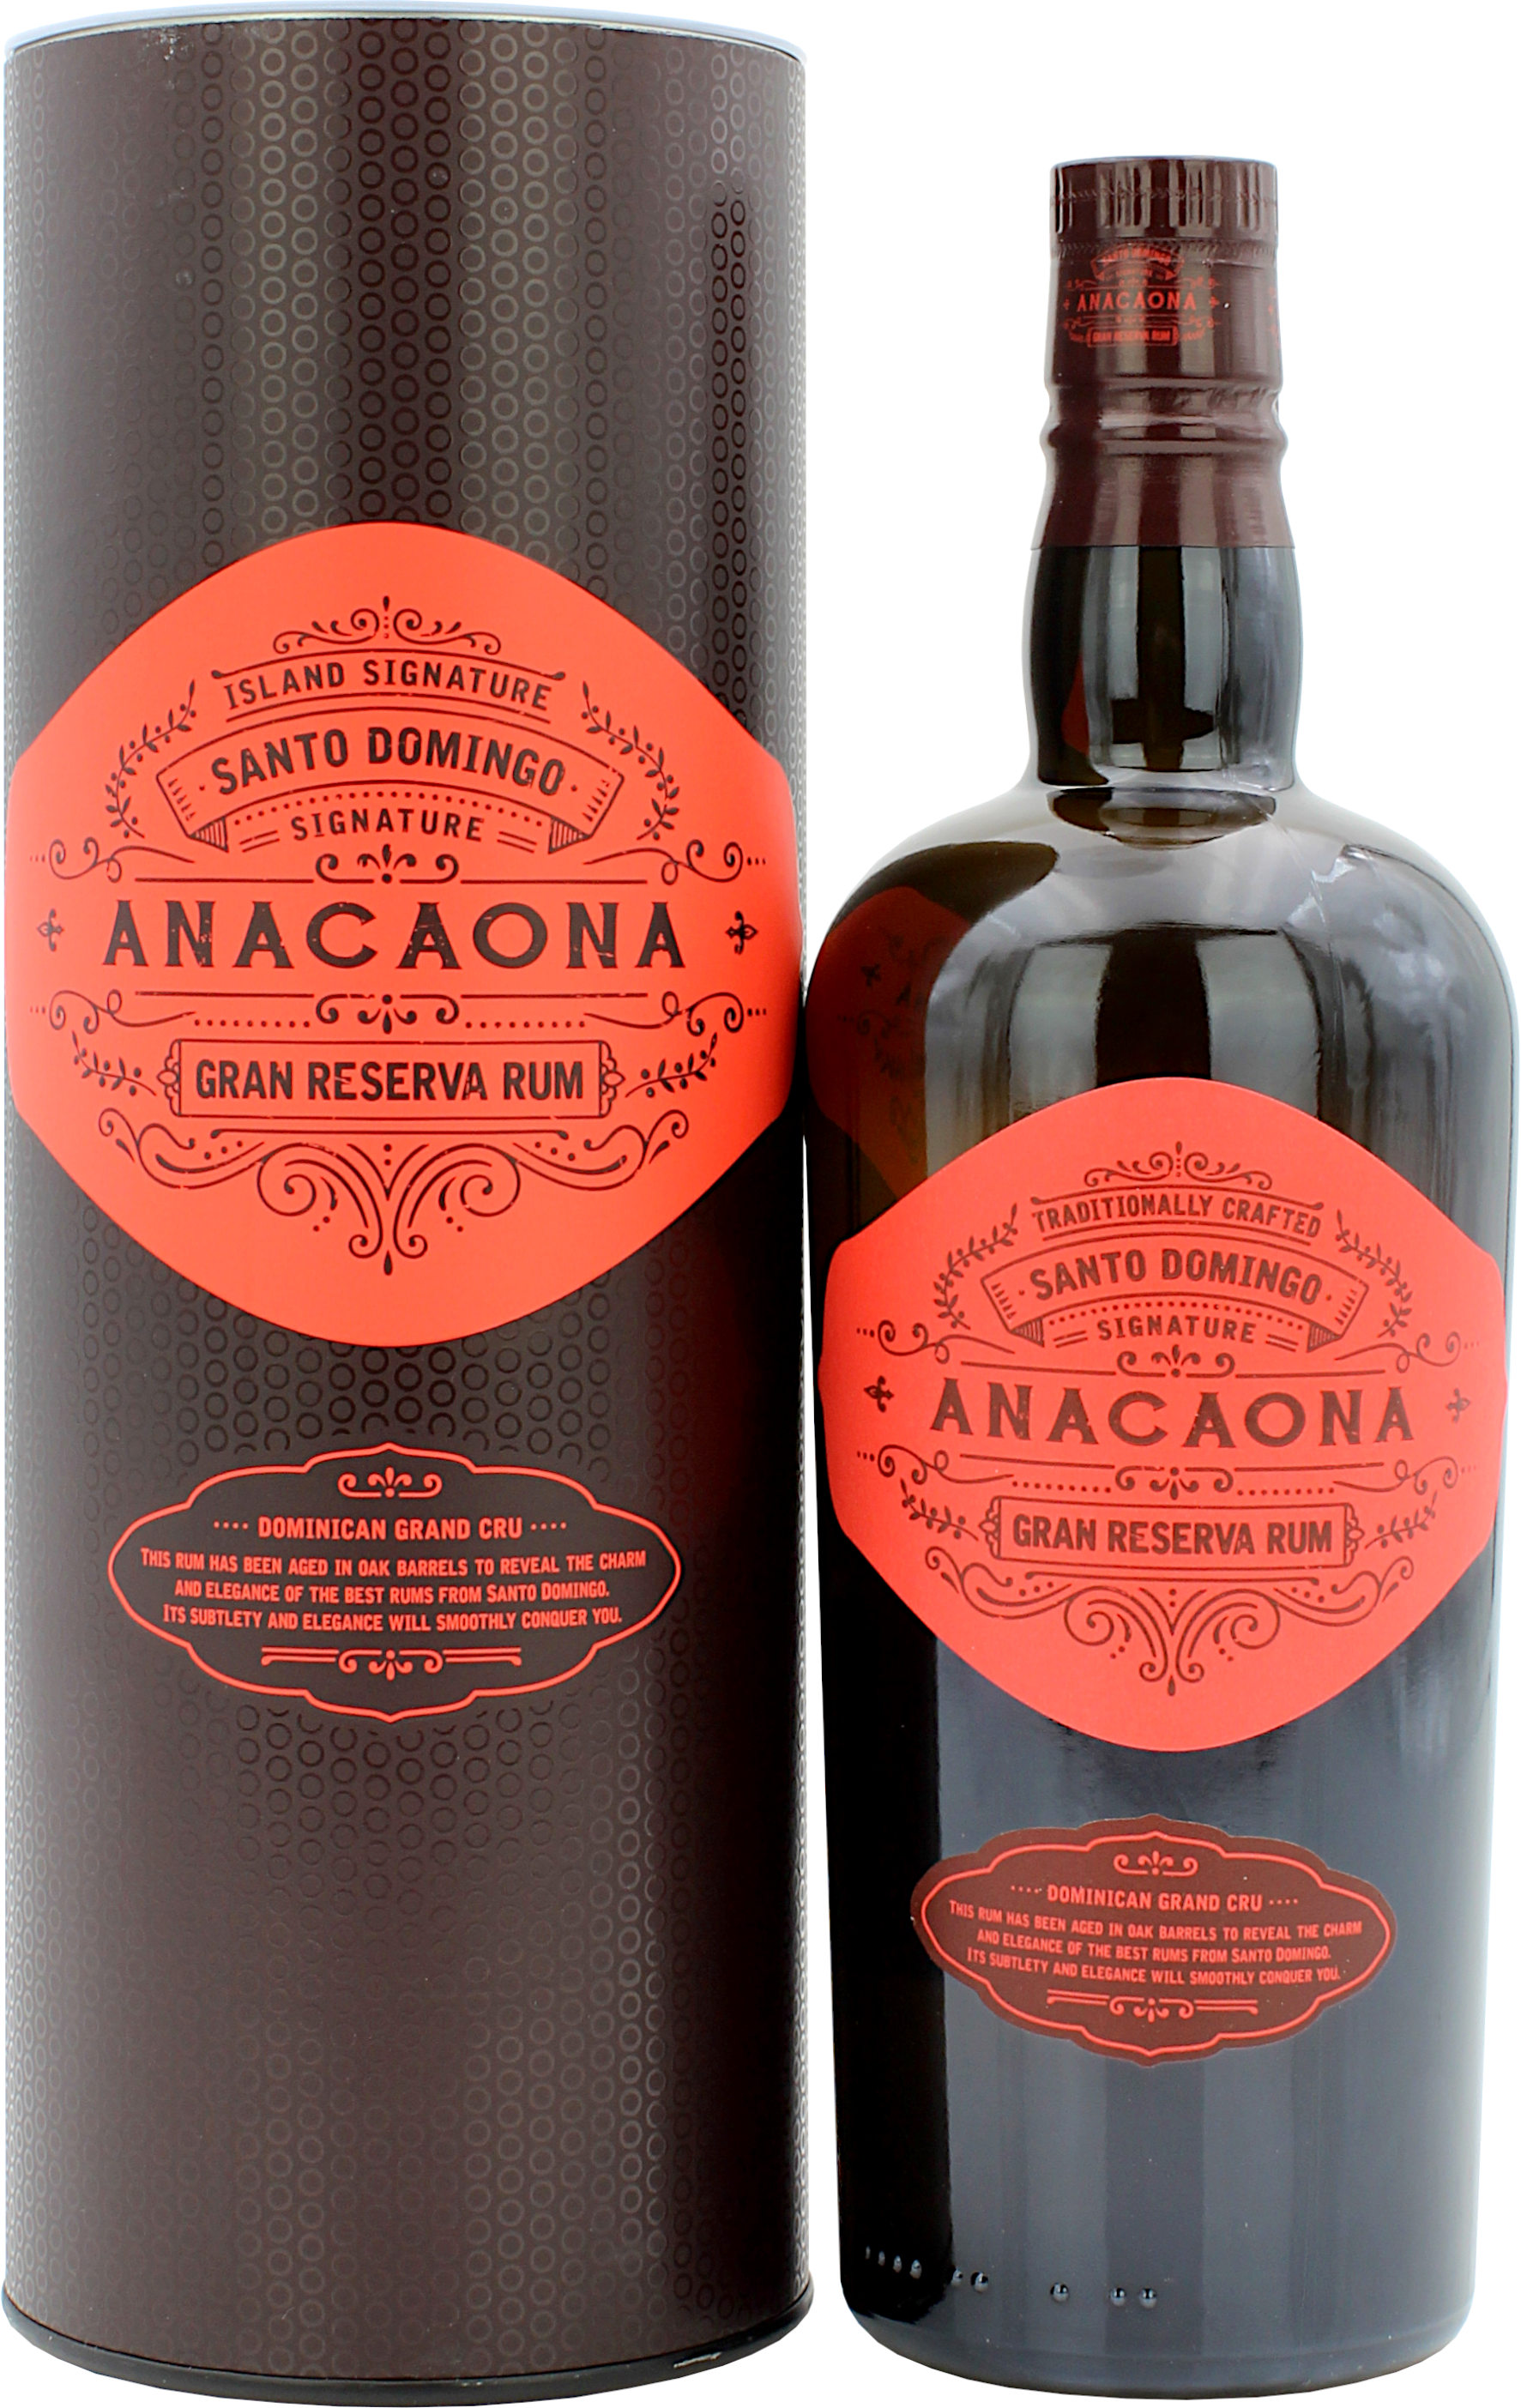 Anacaona Signature Santo Domingo Gran Reserva Rum 40.0% 0,7l